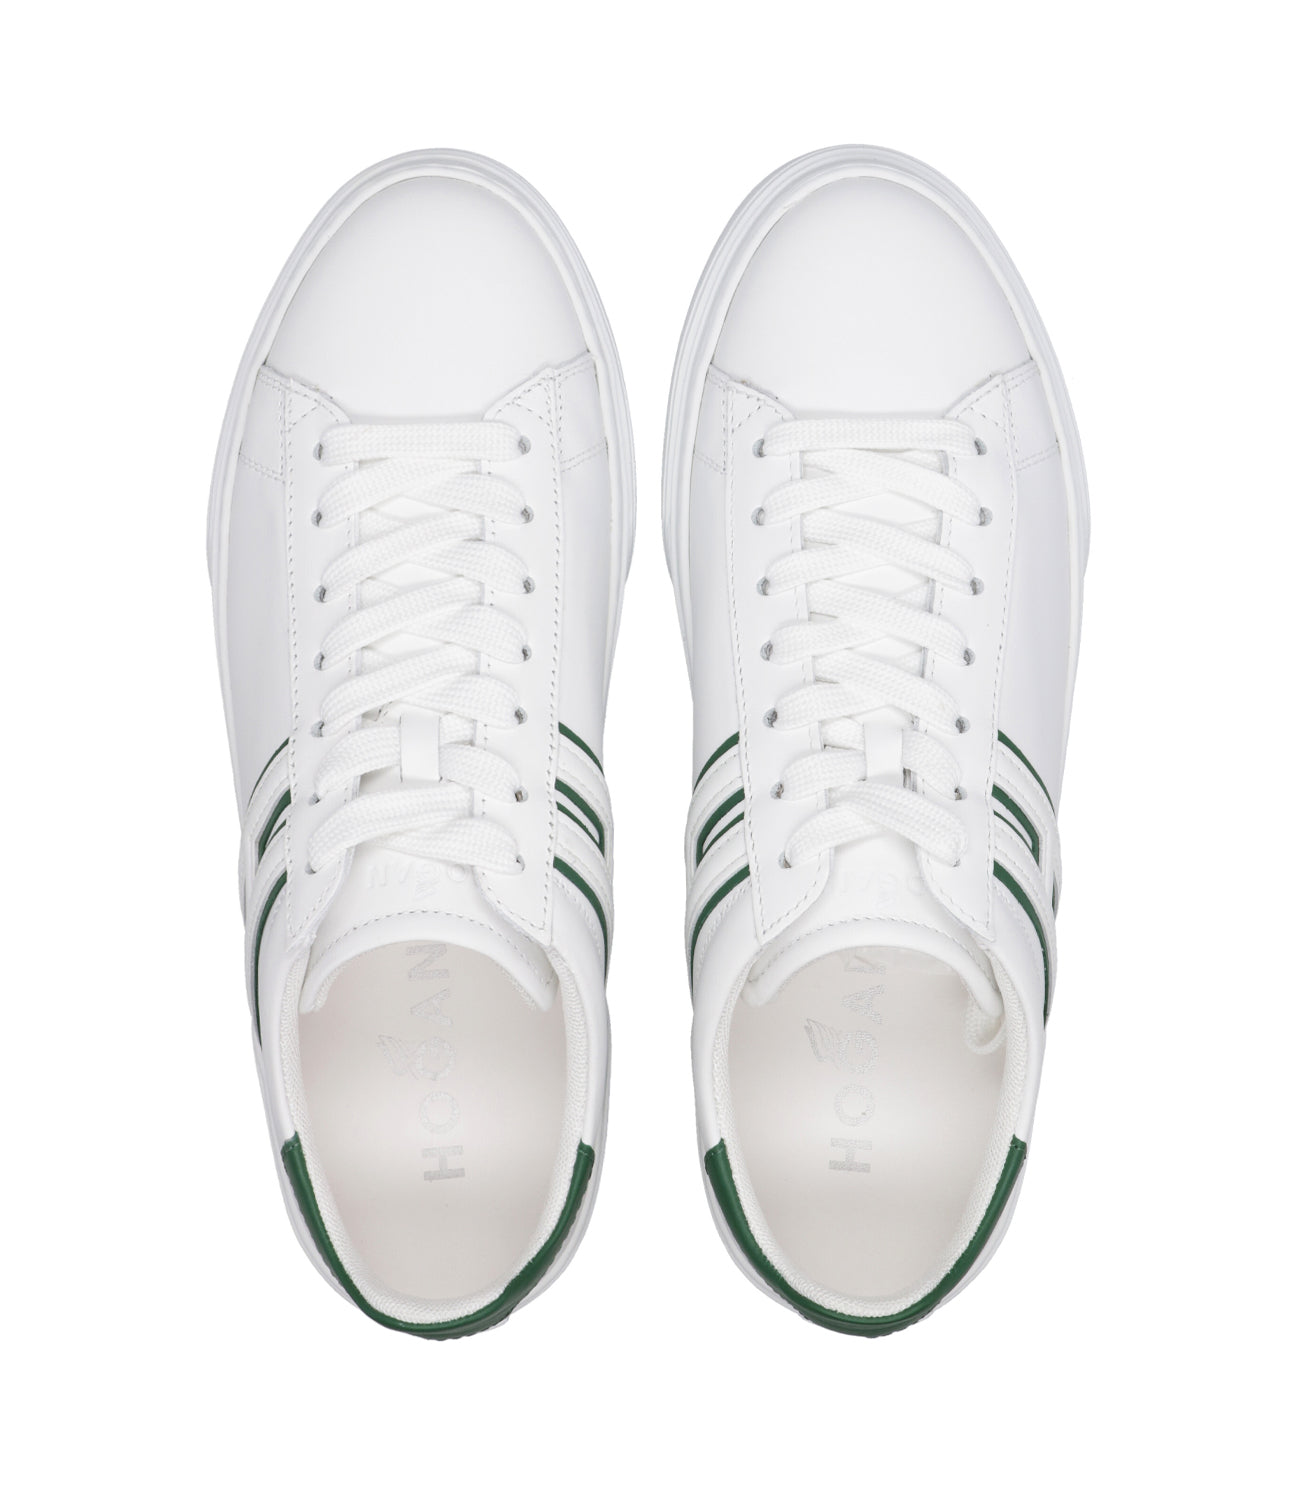 Hogan | Sneakers H365 Canaletto Bianco e Verde